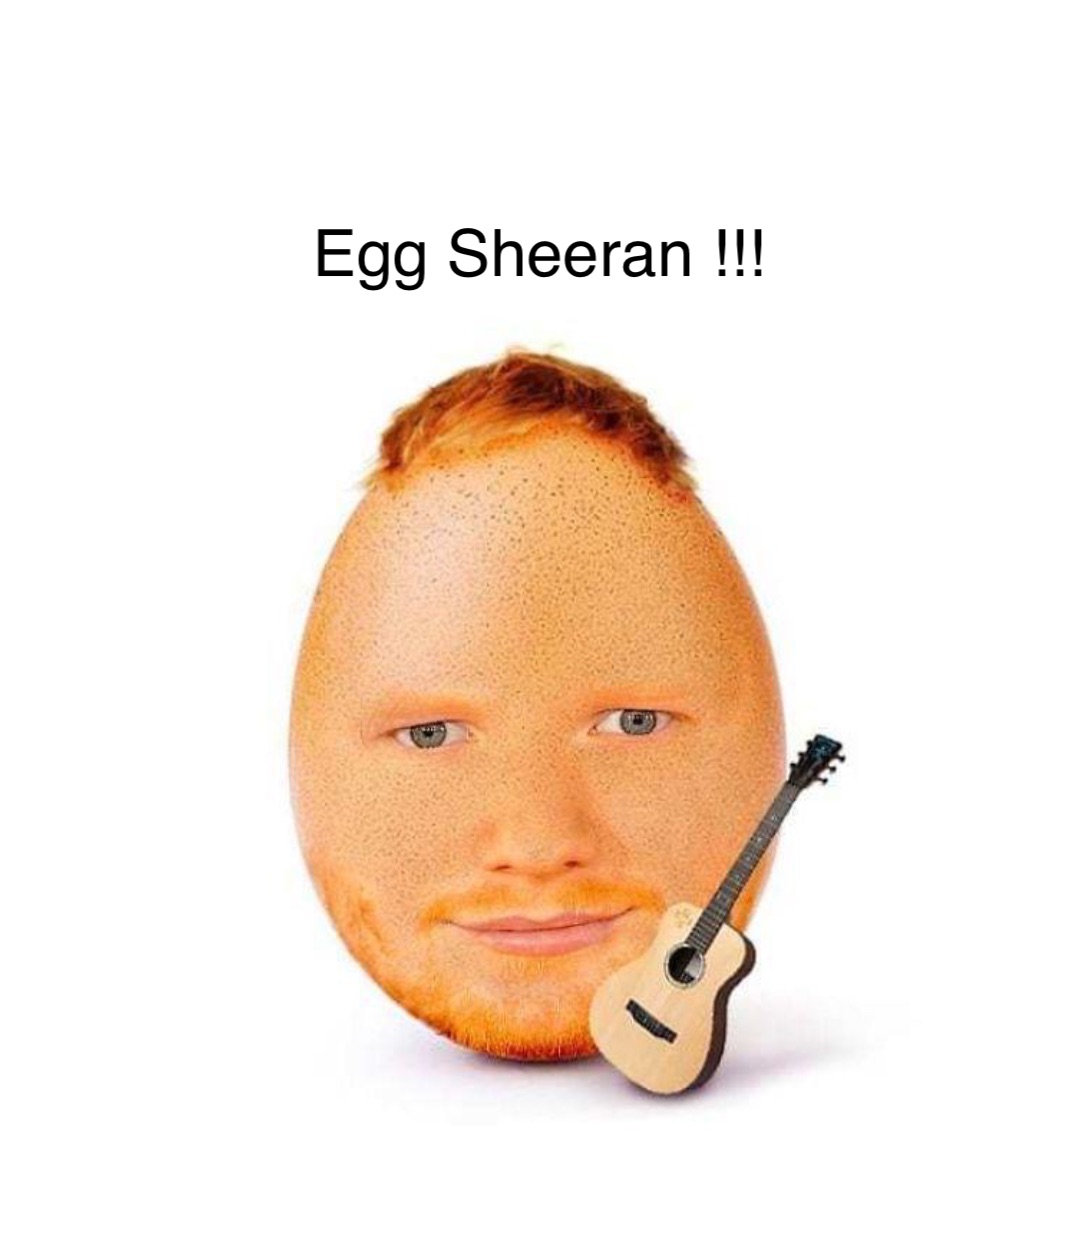 Double tap to edit Egg Sheeran !!!